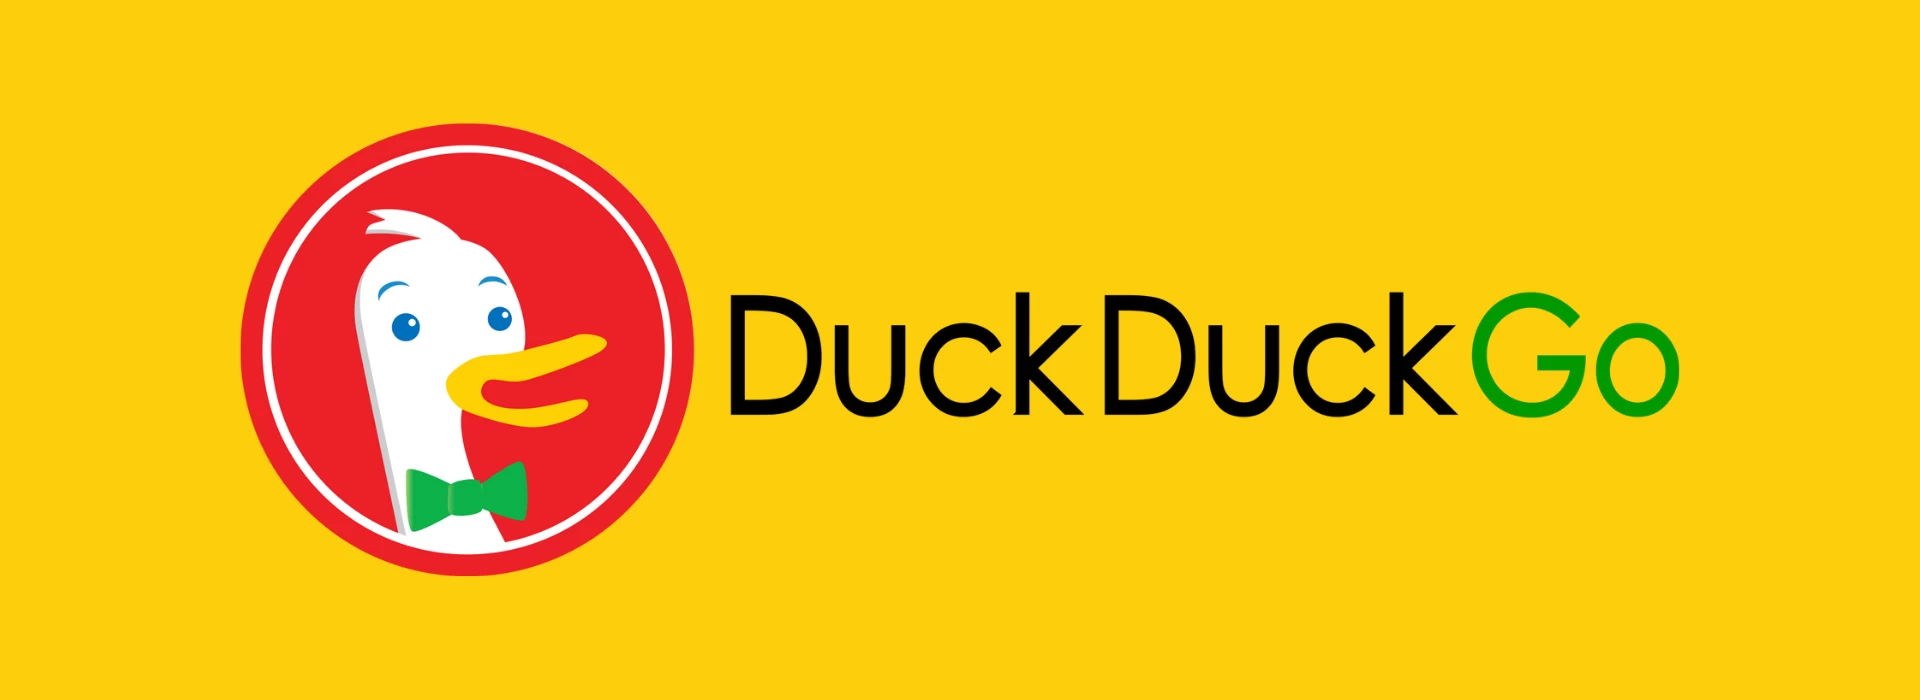 DuckDuckGo’yu Keşfedin: Güvenli Arama Deneyimi